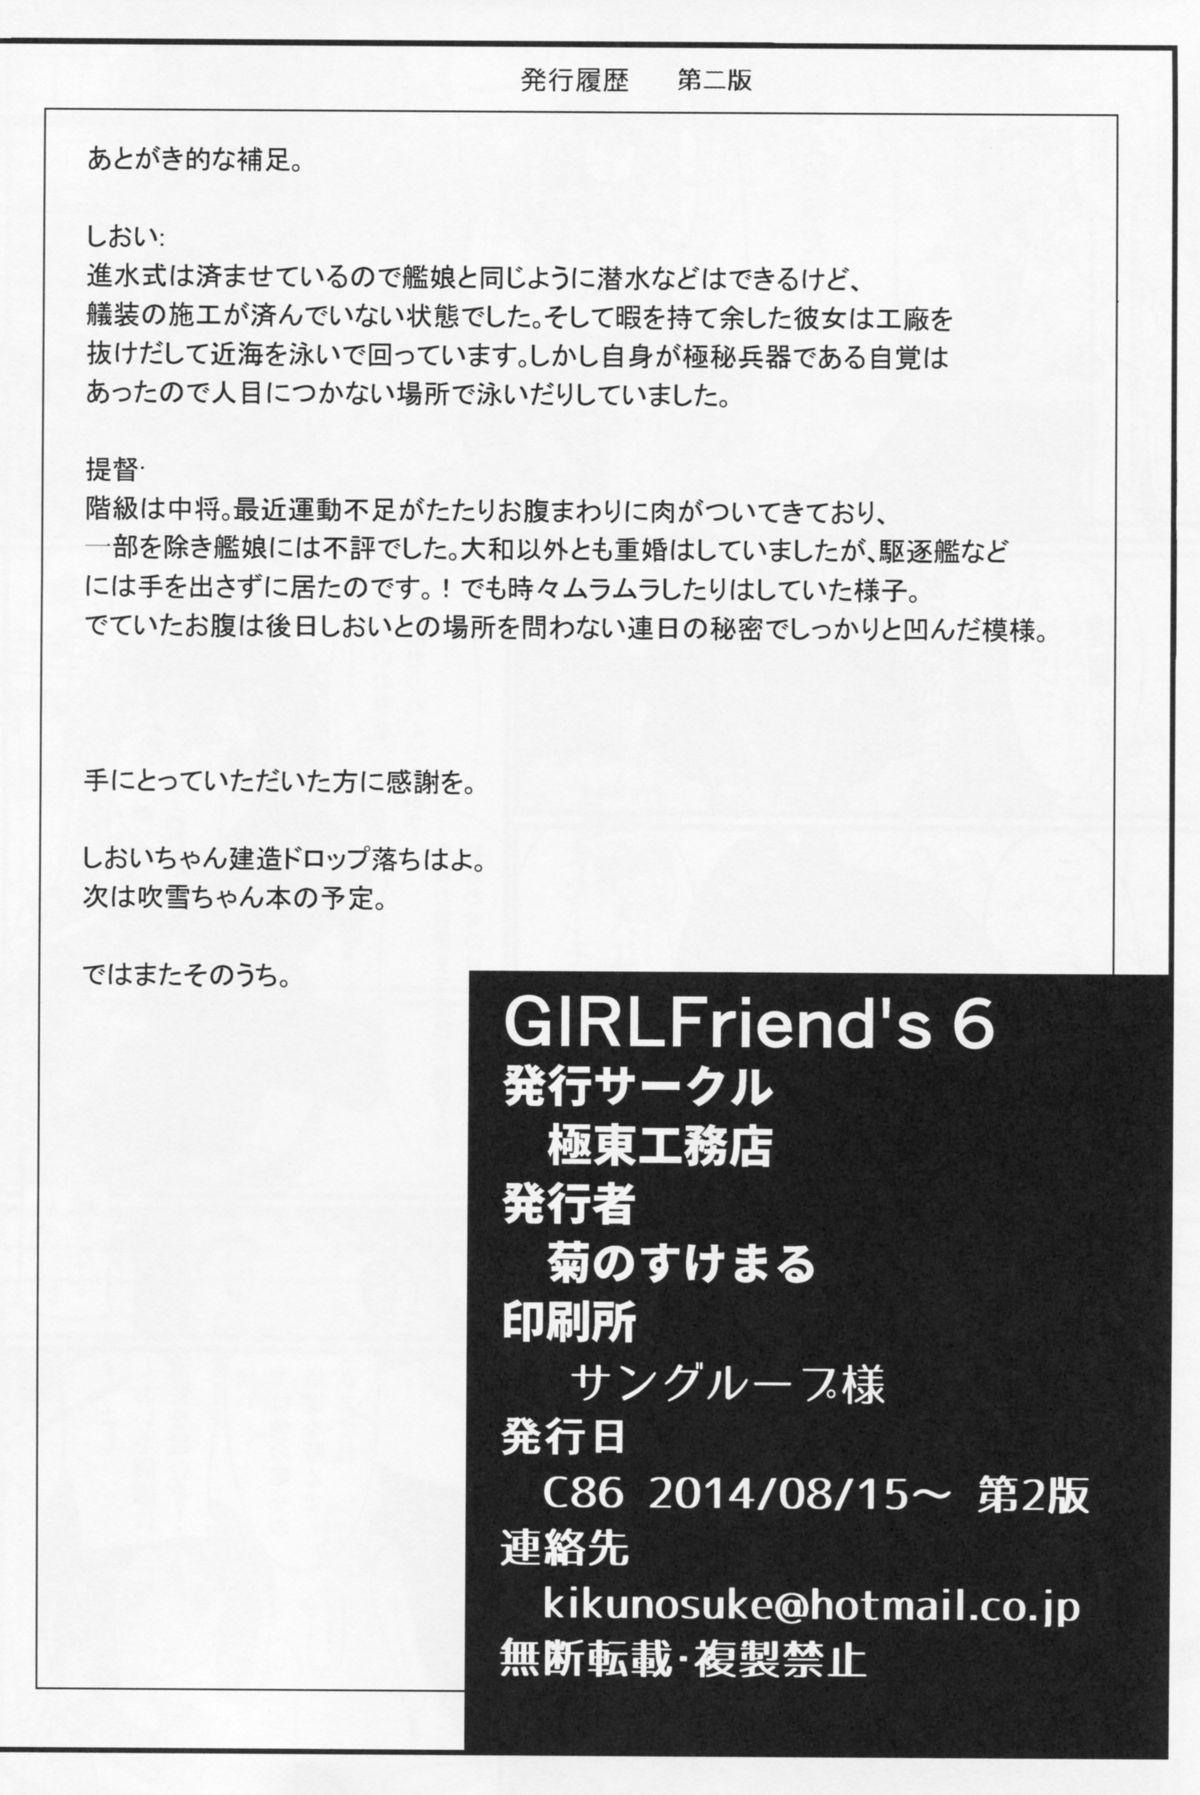 GIRLFriend's 6 20